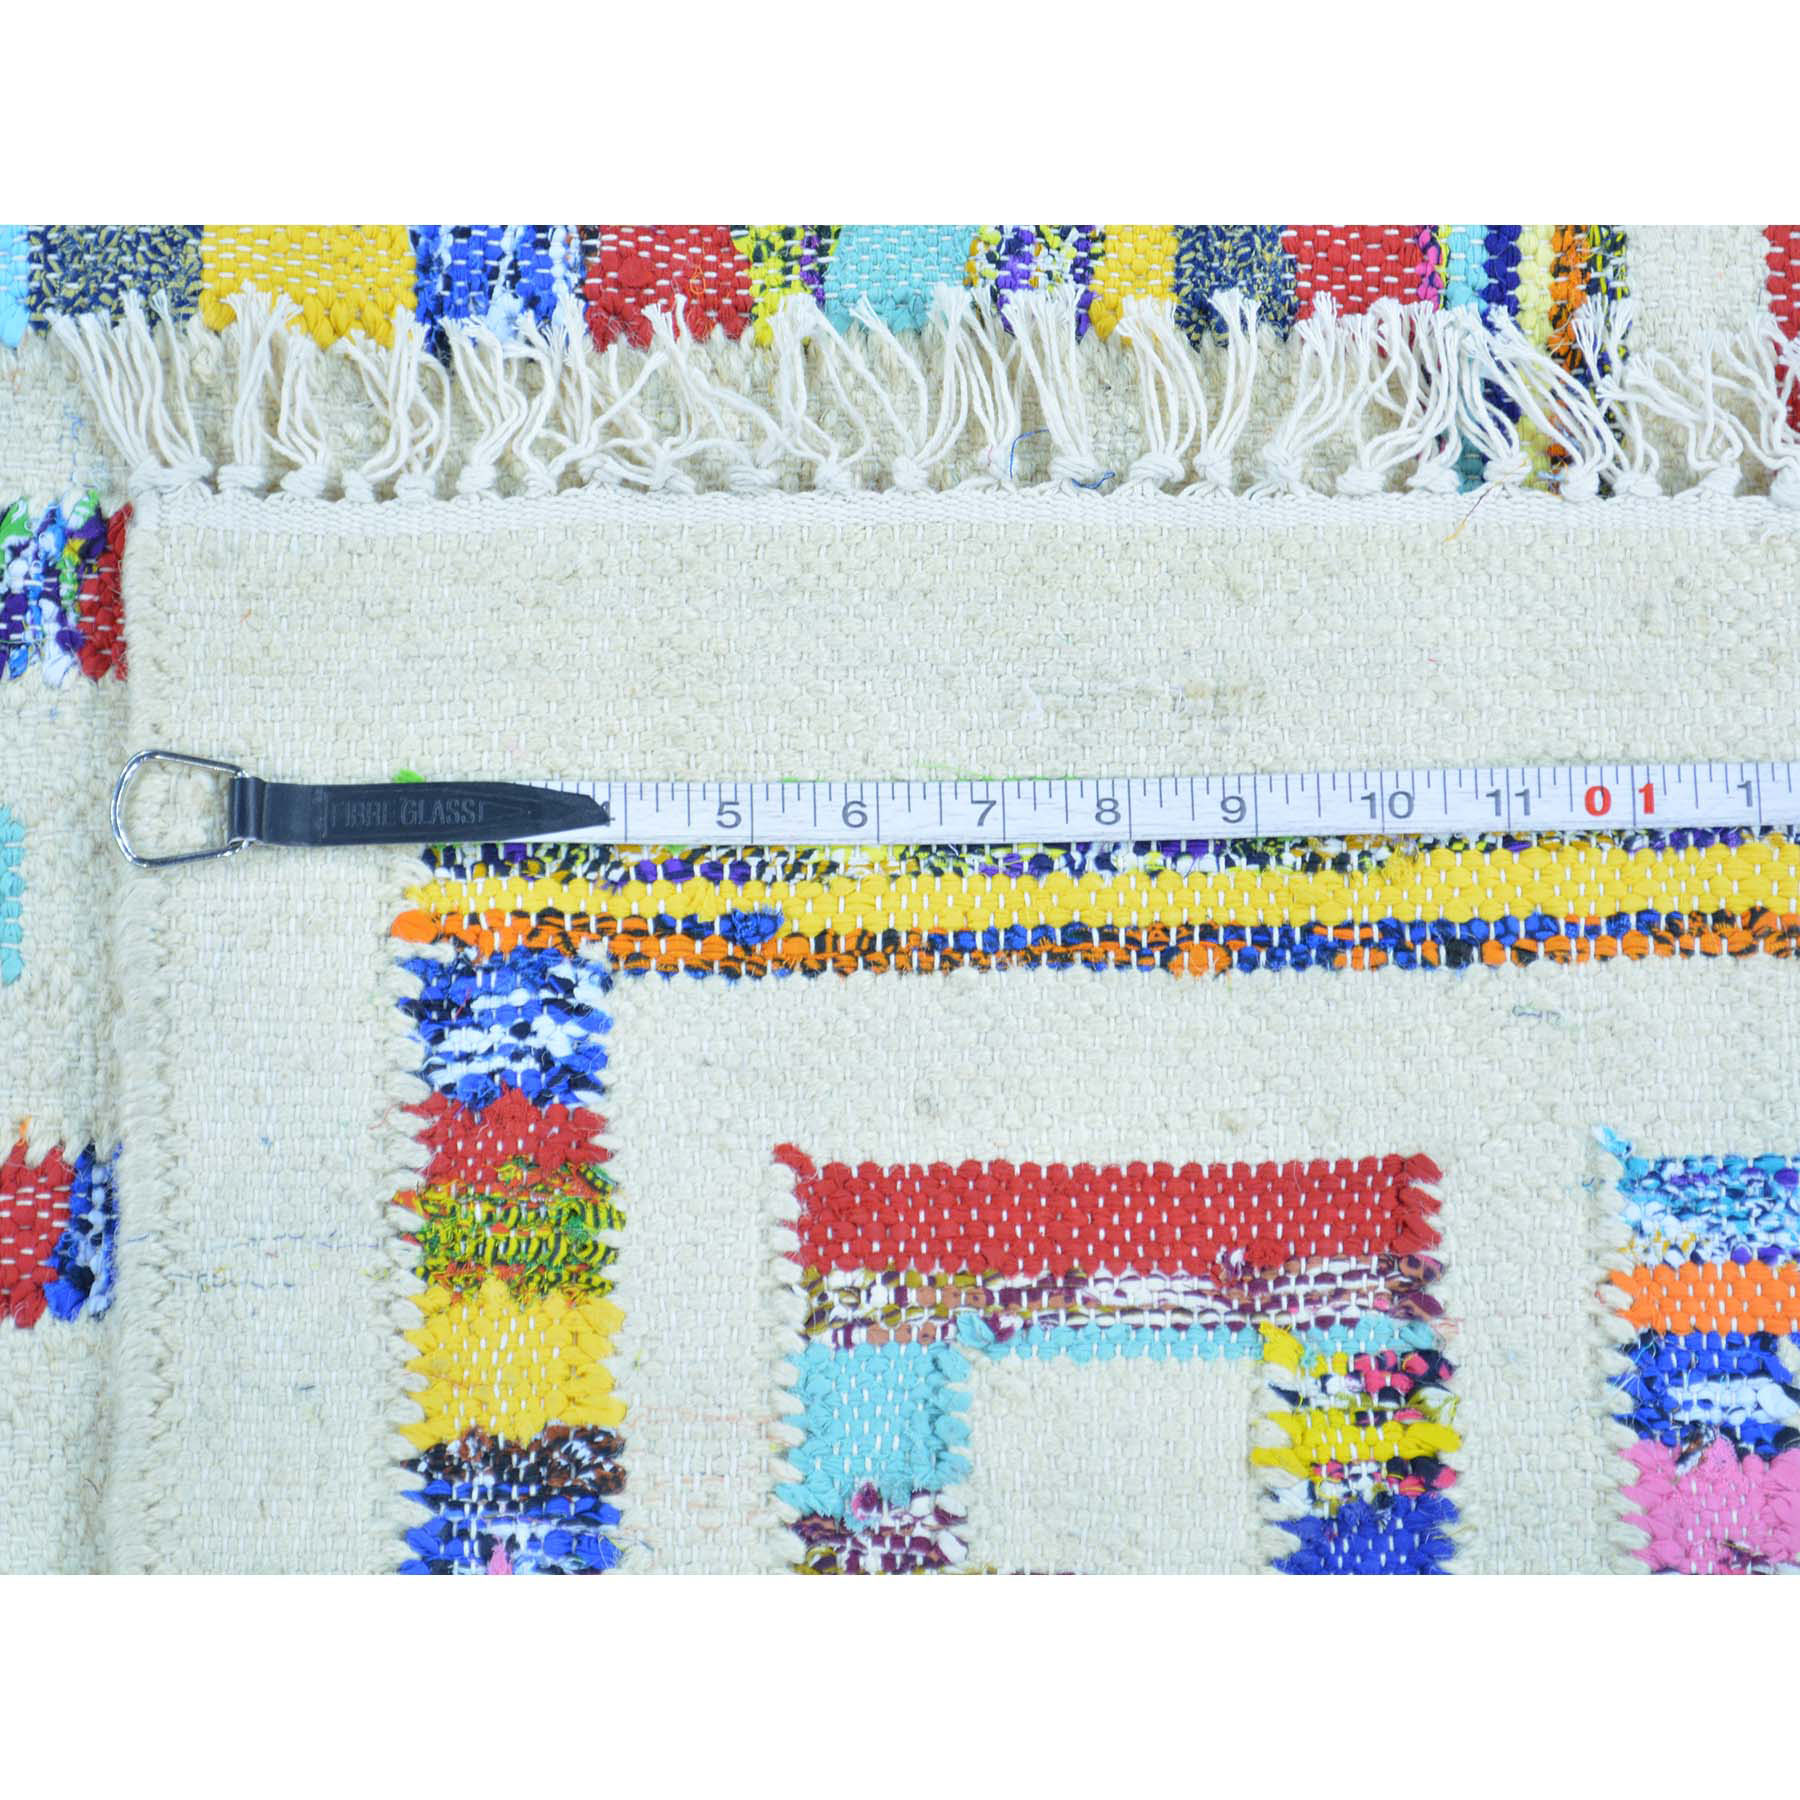 5-x7- Flat Weave Cotton And Sari Silk Hand Woven Kilim Oriental Rug 